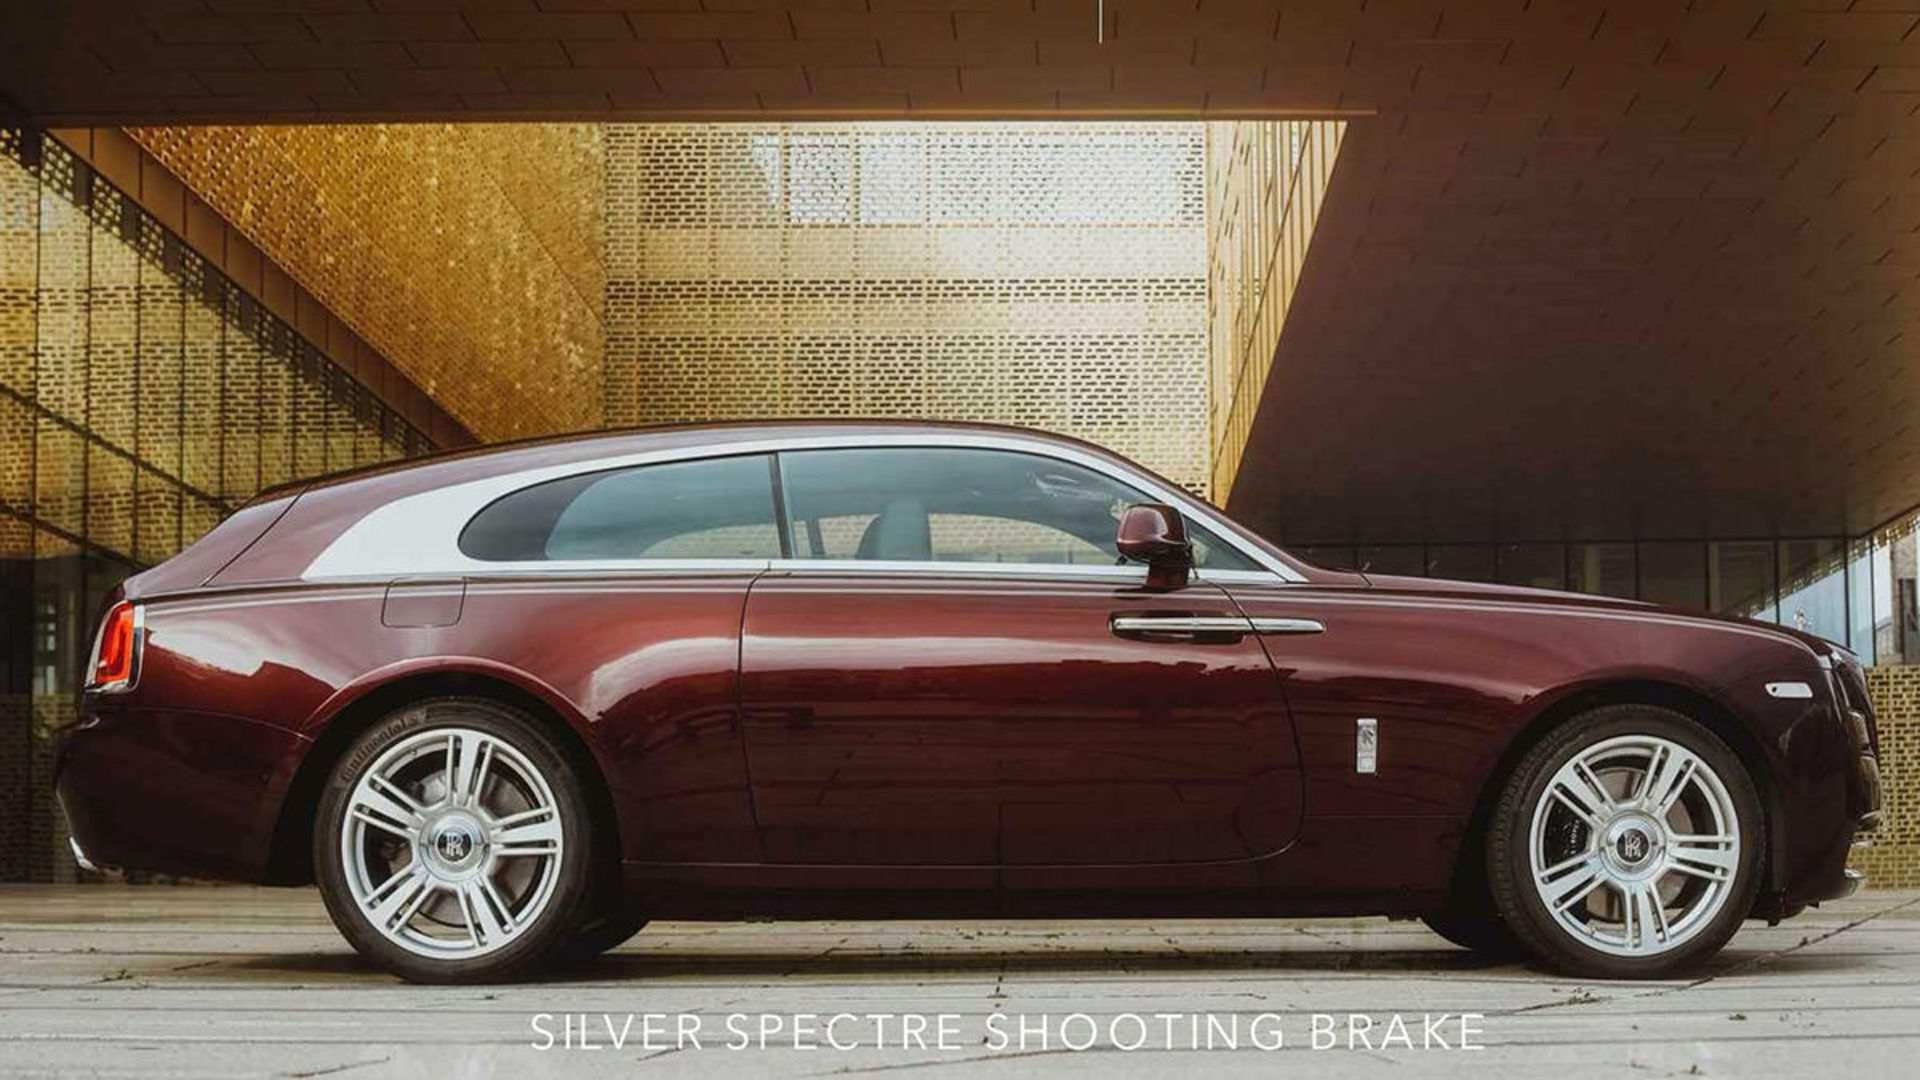 مرجع متخصصين ايران نماي جانبي نسخه شوتينگ بريك رولزرويس ريث / Rolls-Royce Wraith Shooting Brake زرشكي رنگ